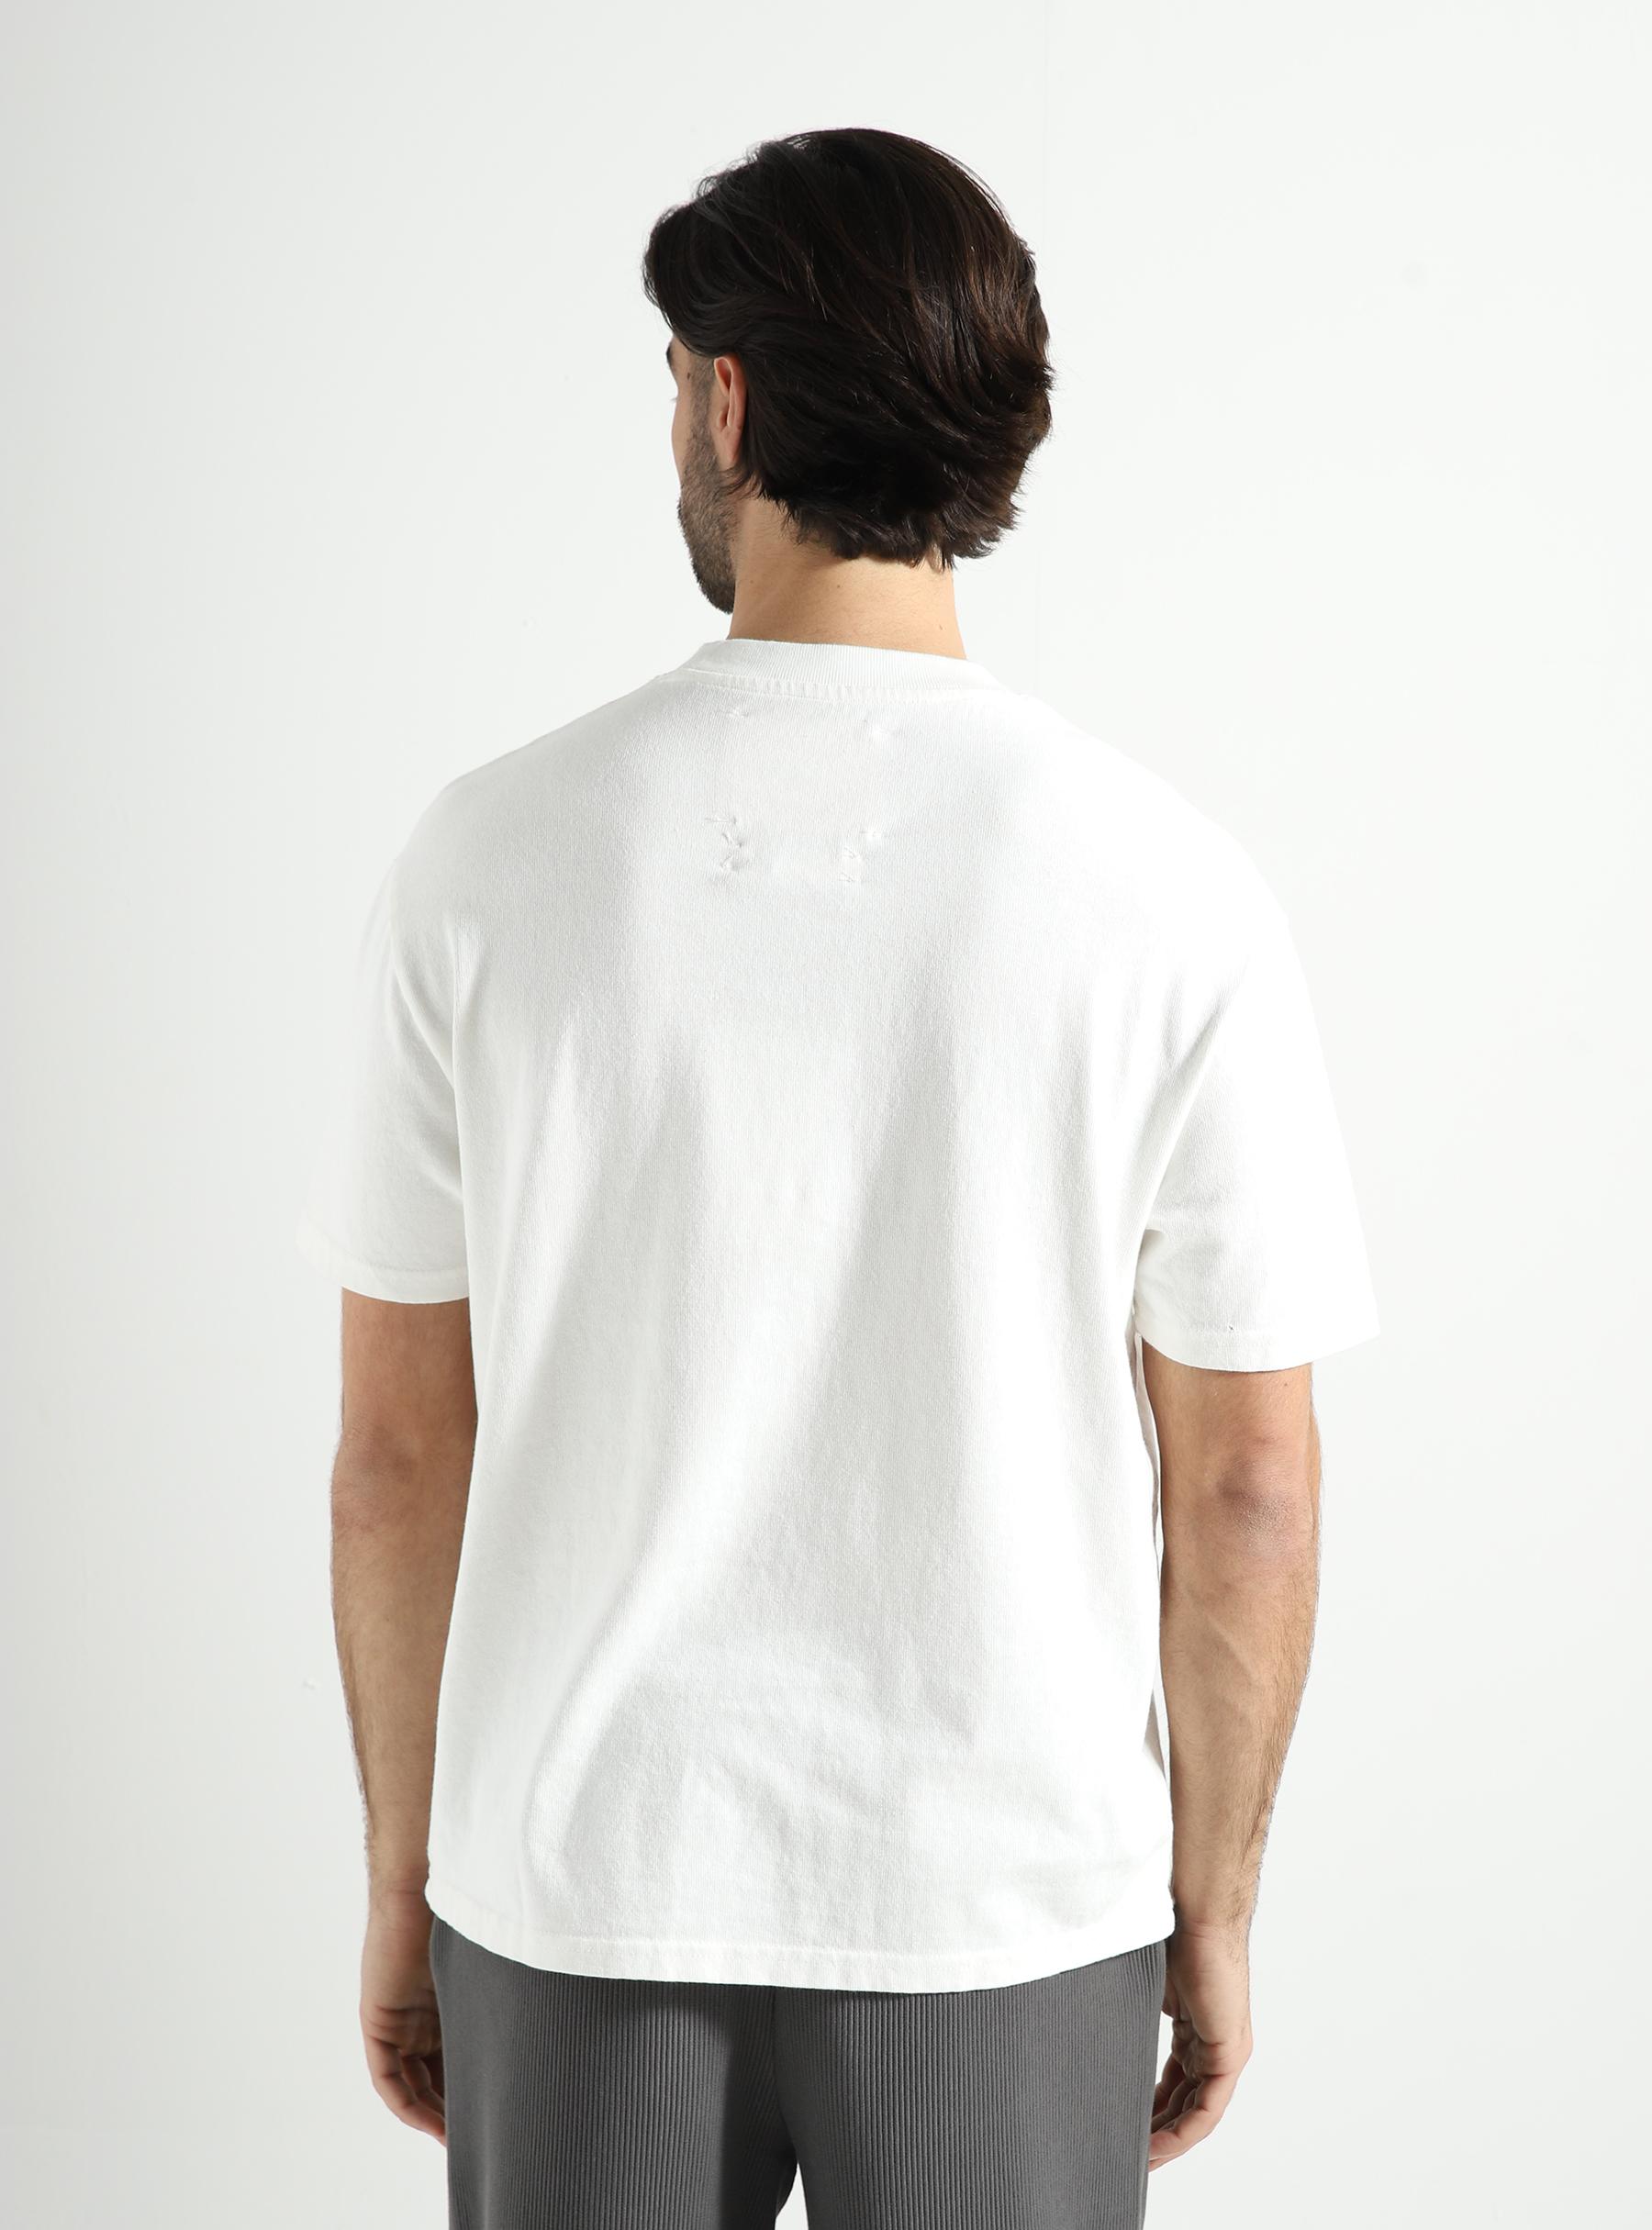 Atelier T-shirt White 161